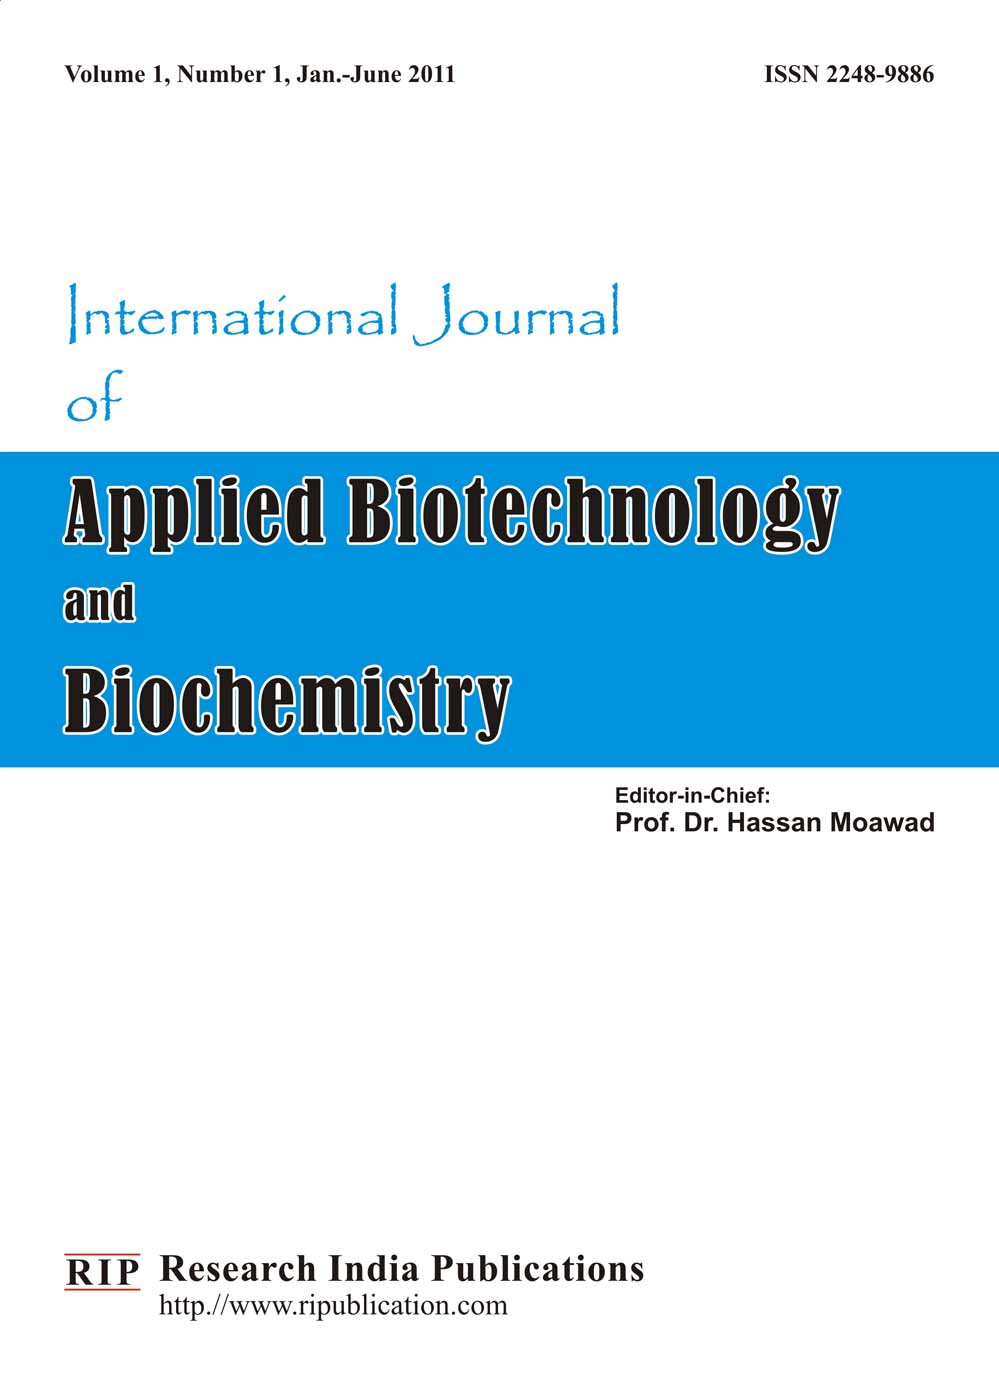 International Journal of Applied Biotechnology and Biochemistry